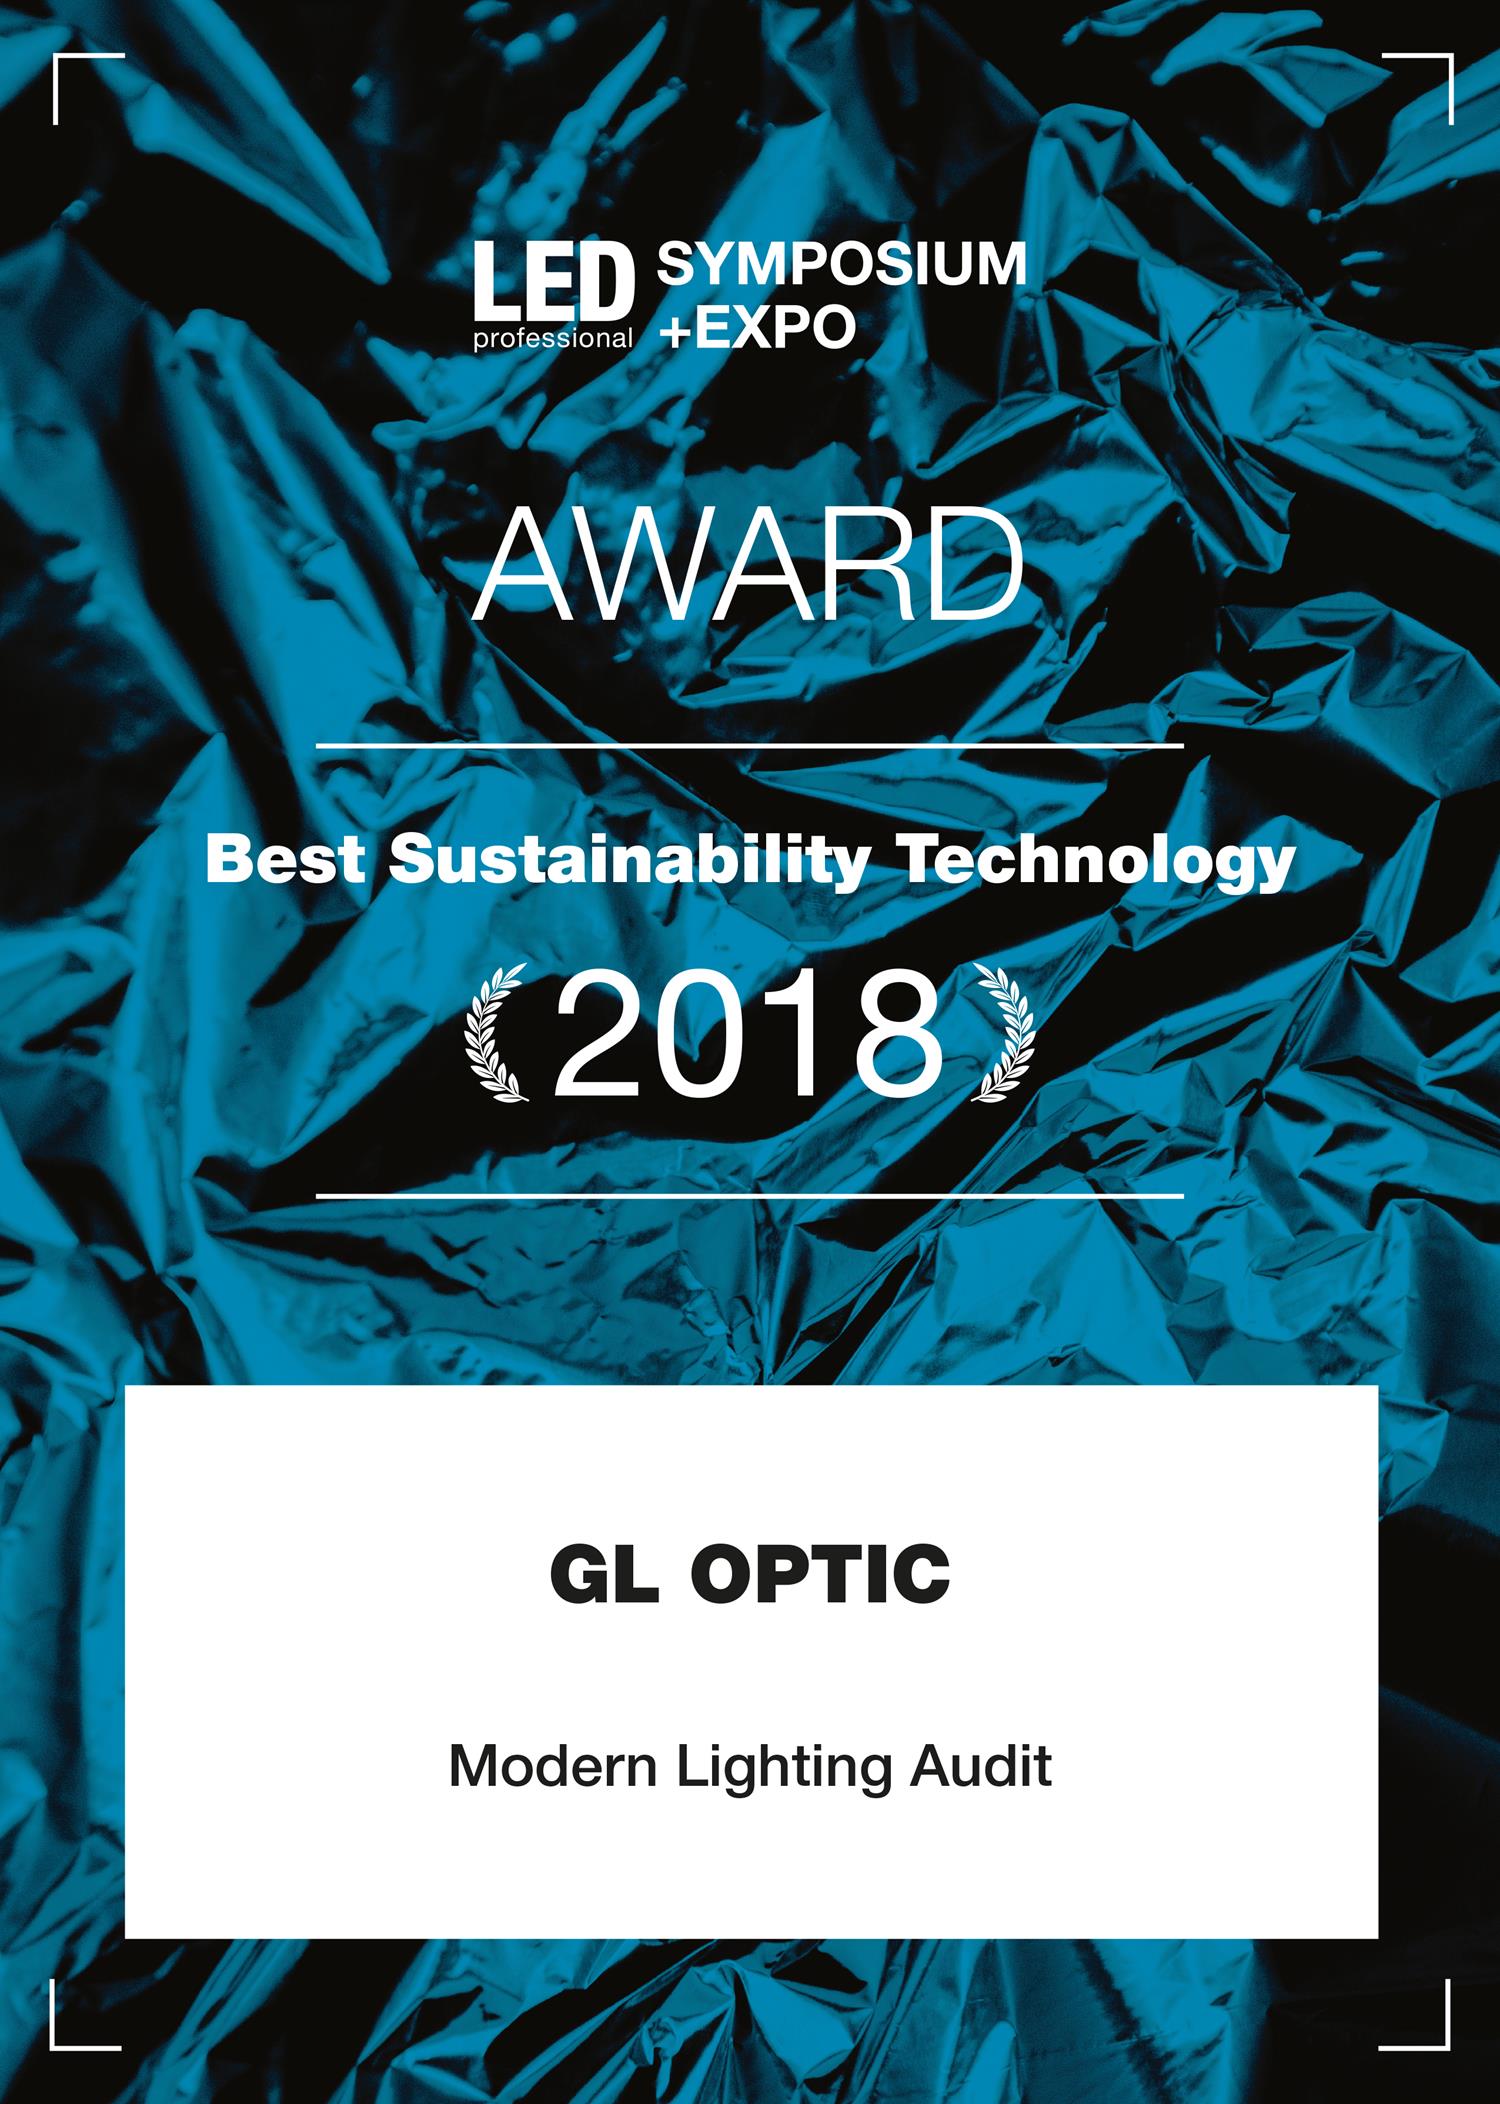 Abbildung Award Best Sustainability Technology 2018